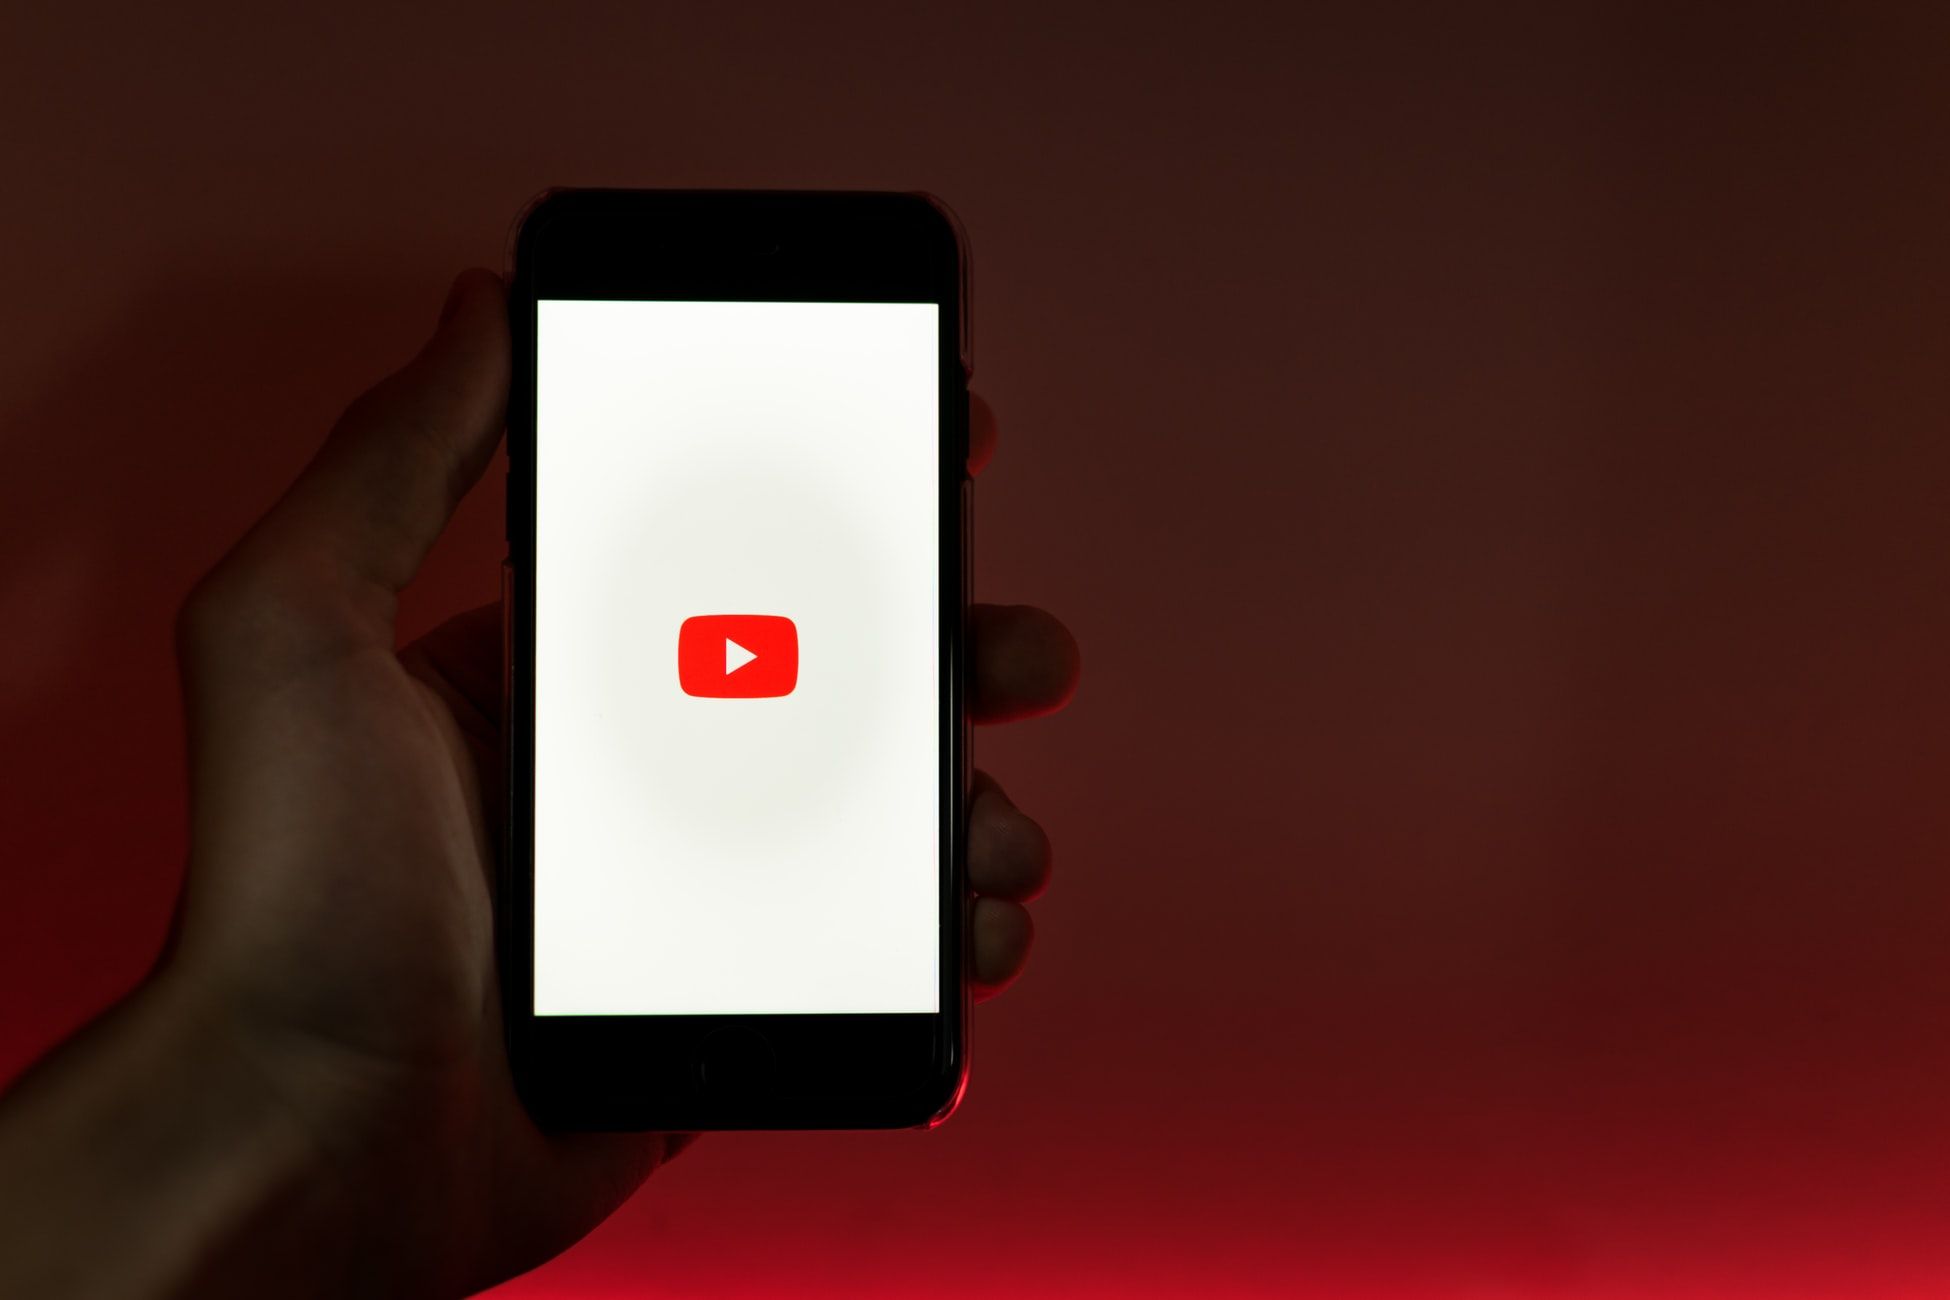 TikTok-competition YouTube shorts clocks 3.5 billion daily views in India